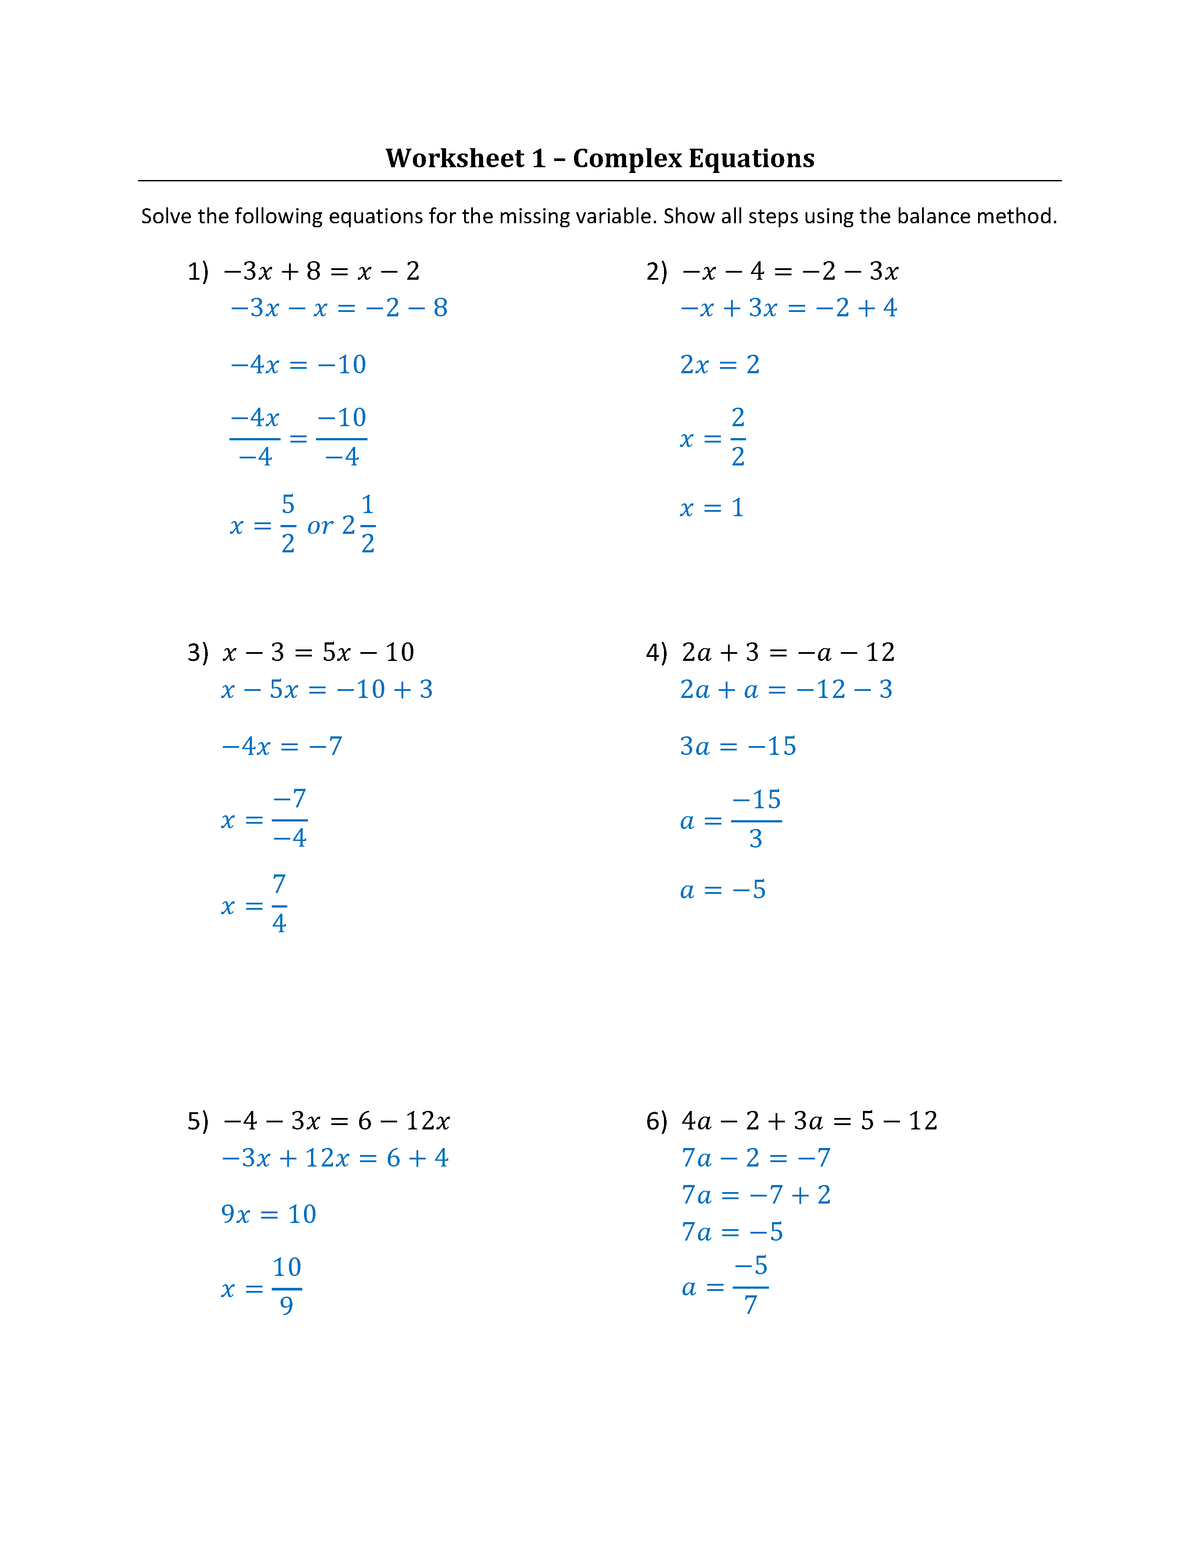 Worksheets - Week 6 - 3 Solving complex equations Solutions - Worksheet ...